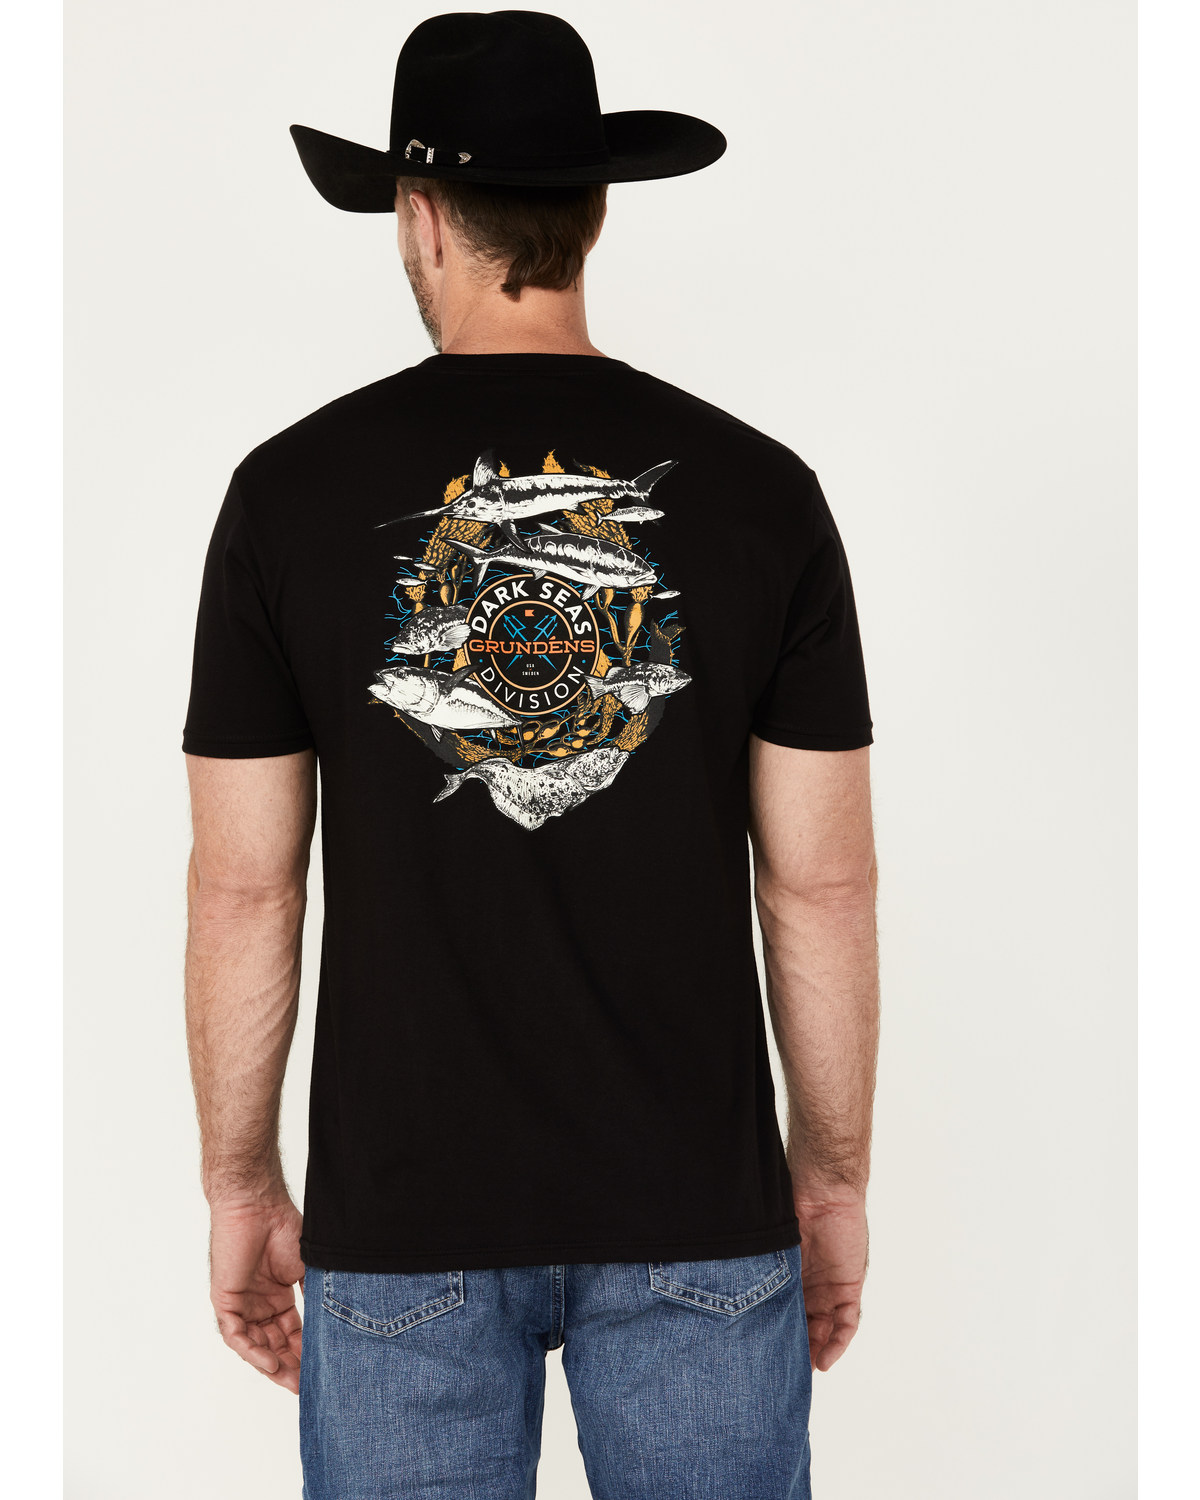 Dark Seas Men's Grundens Short Sleeve Graphic T-Shirt